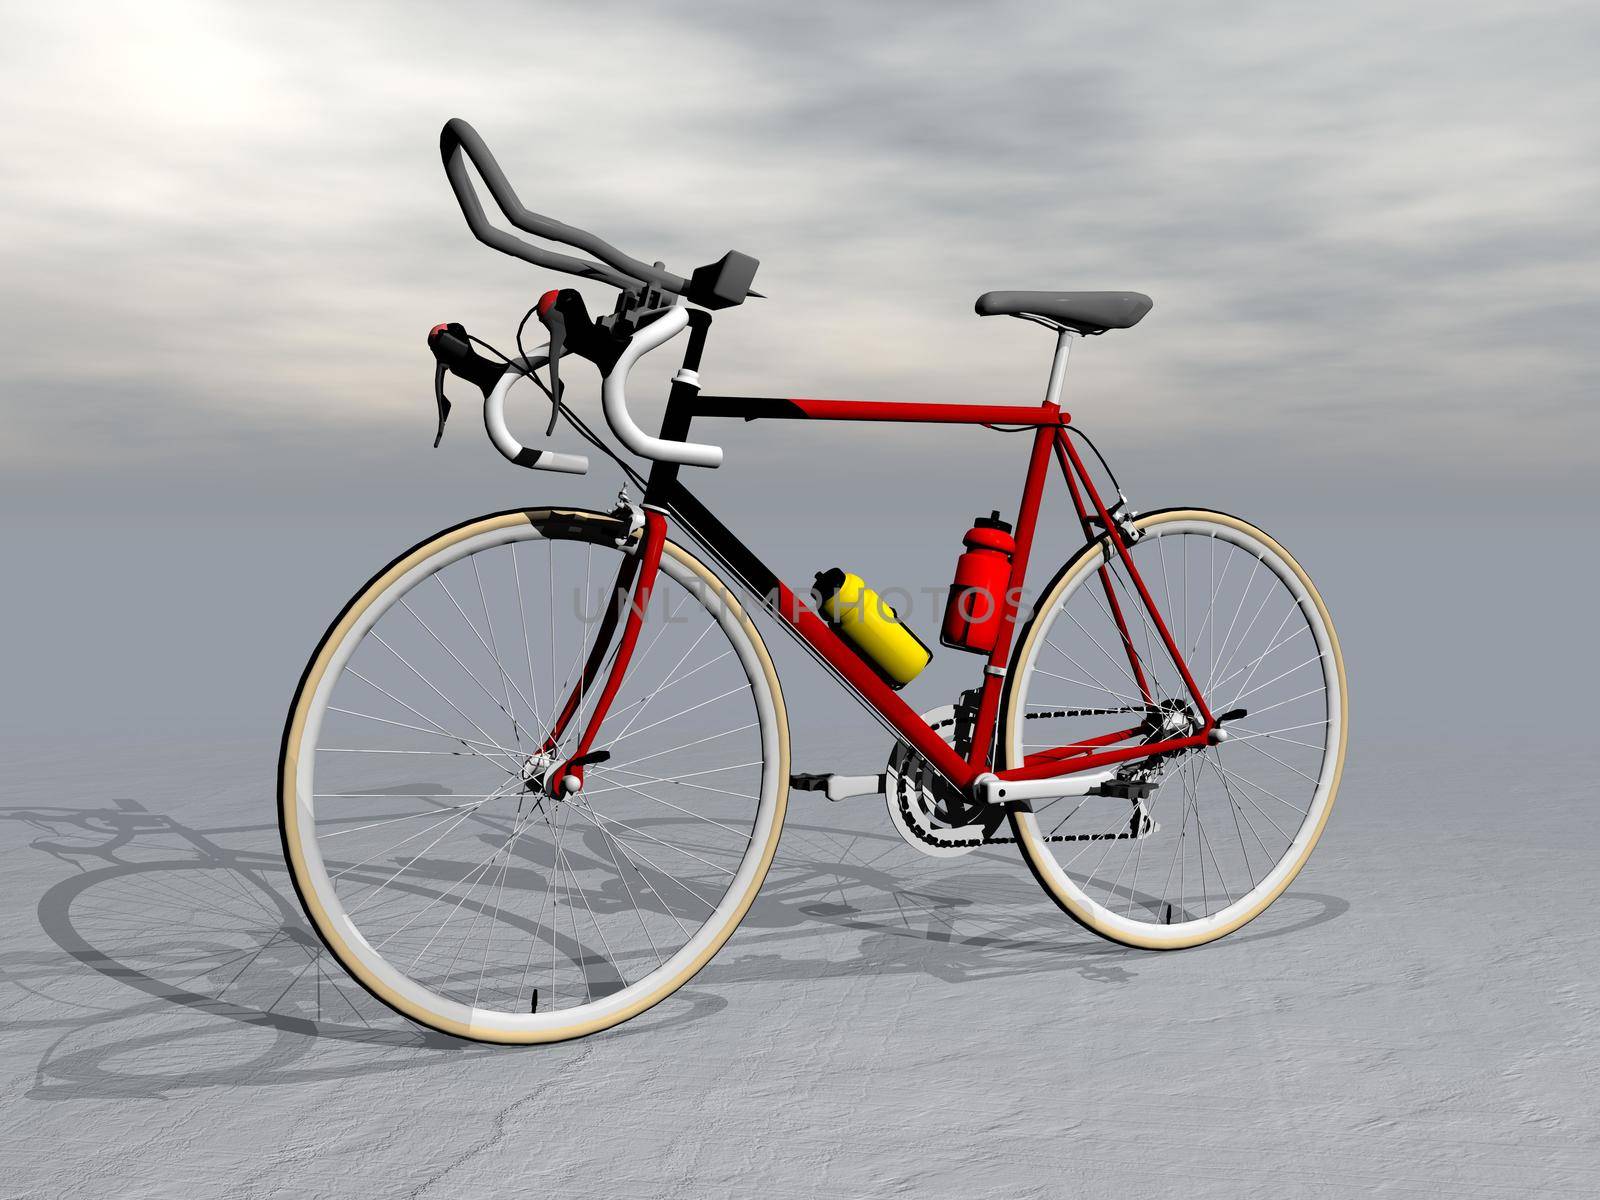 Race bike - 3D render by Elenaphotos21